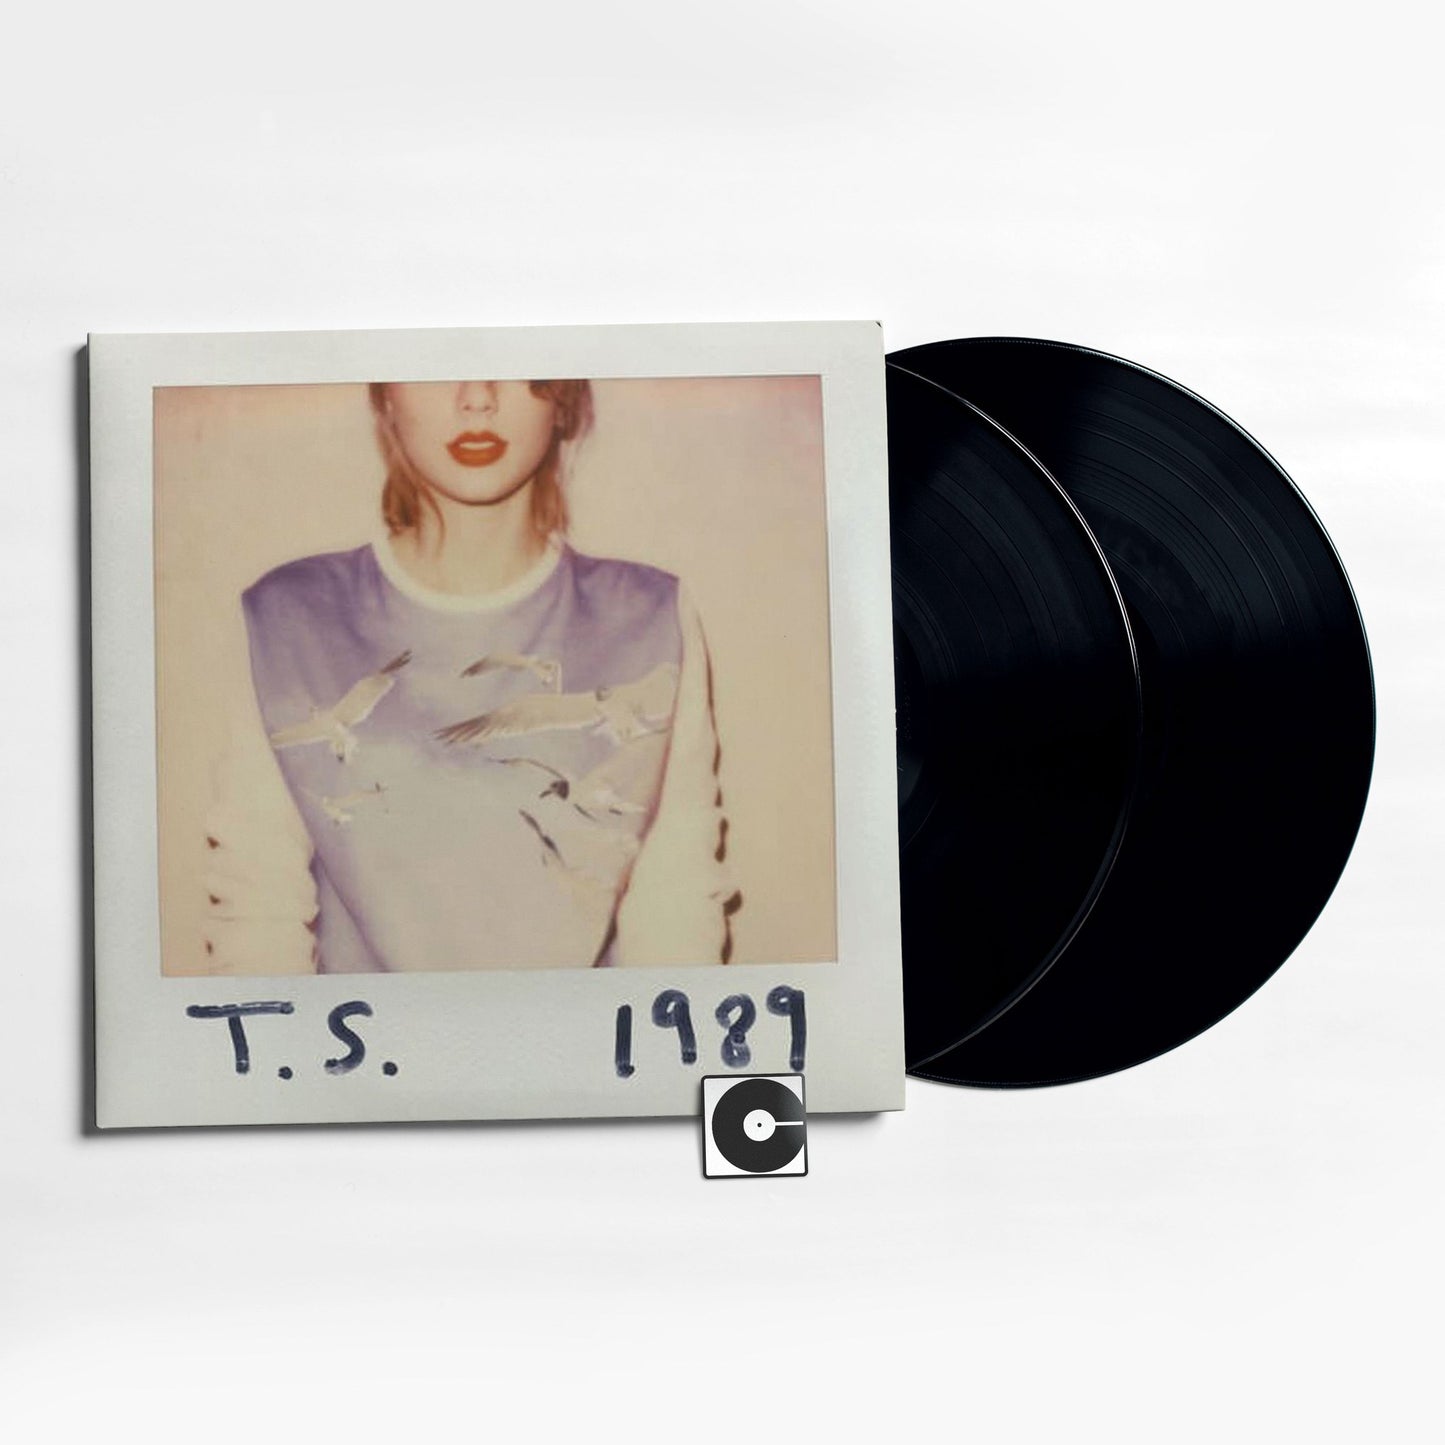 Taylor Swift - "1989"